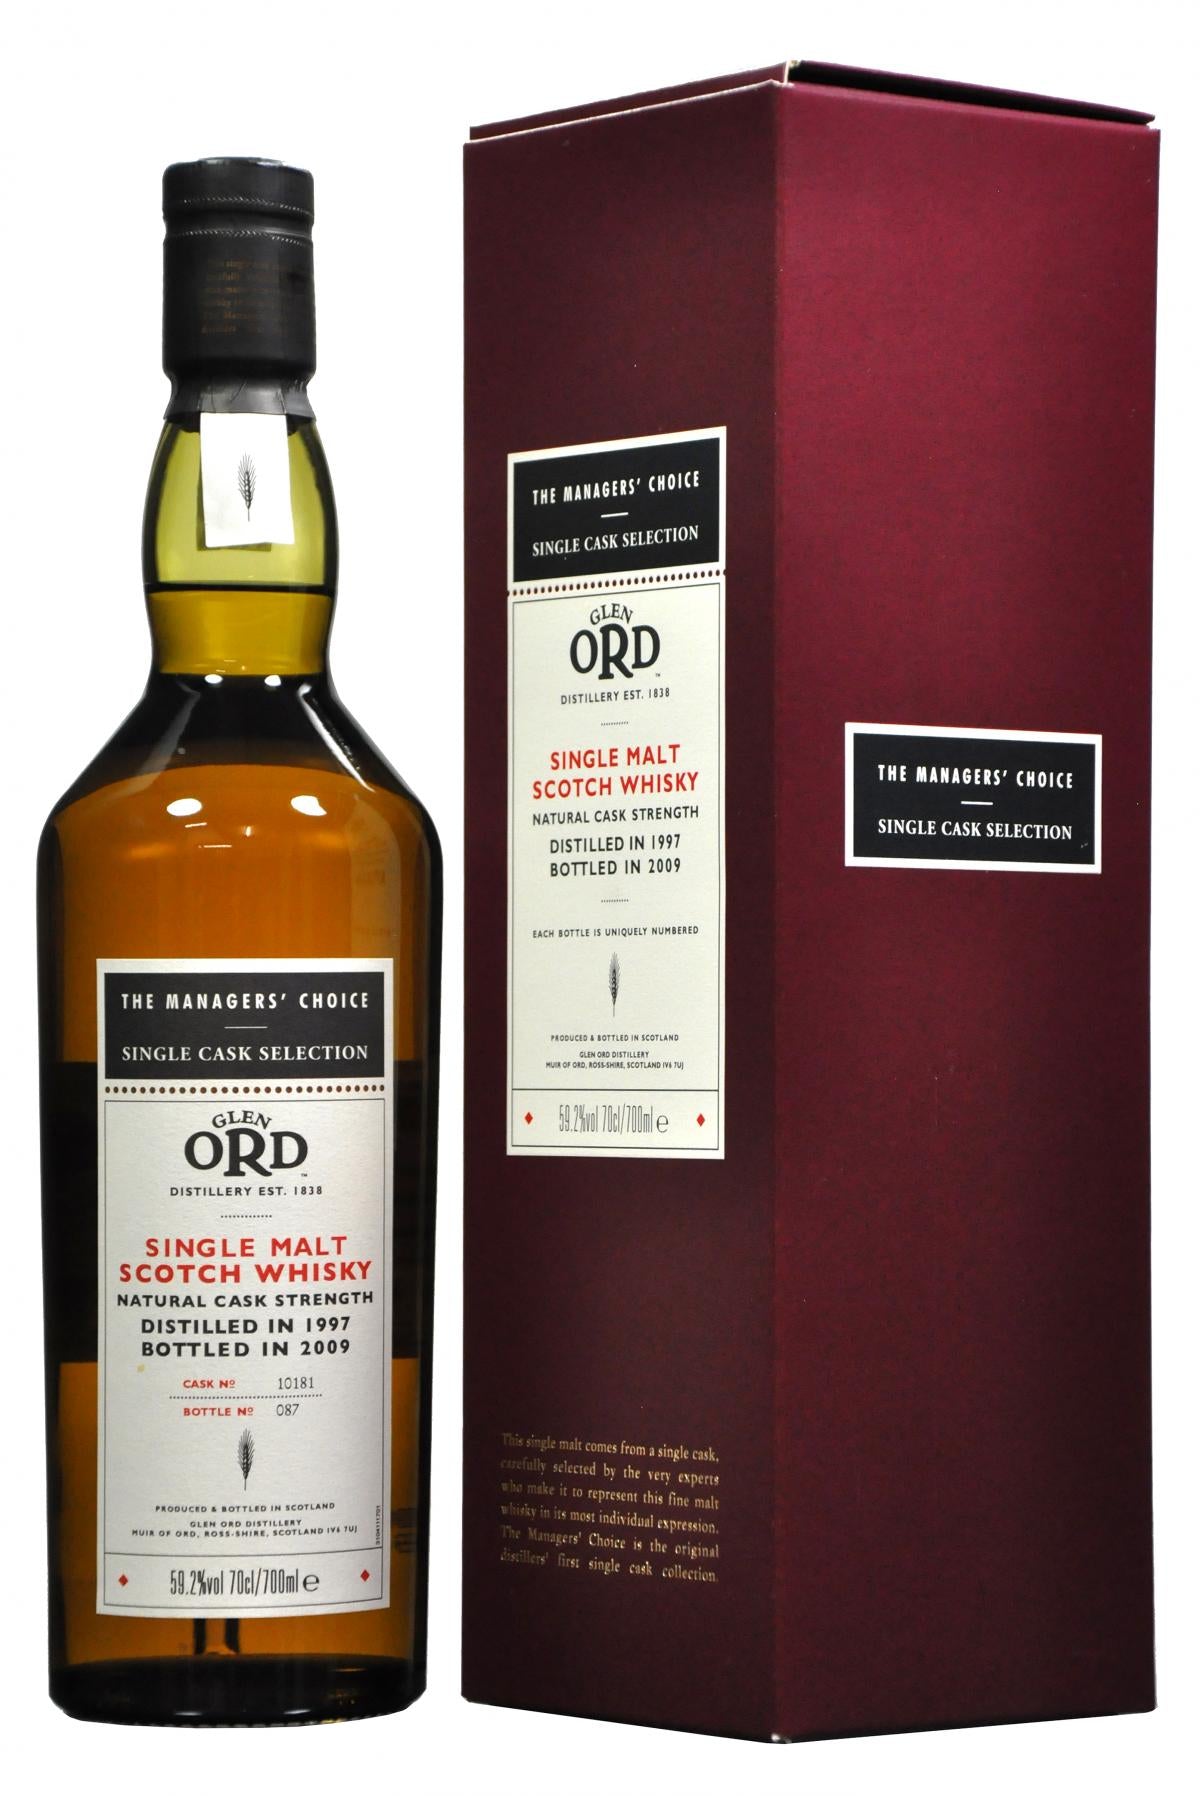 glen ord distilled 1997 bottled 2009, managers choice highland single malt scotch whisky whiskey